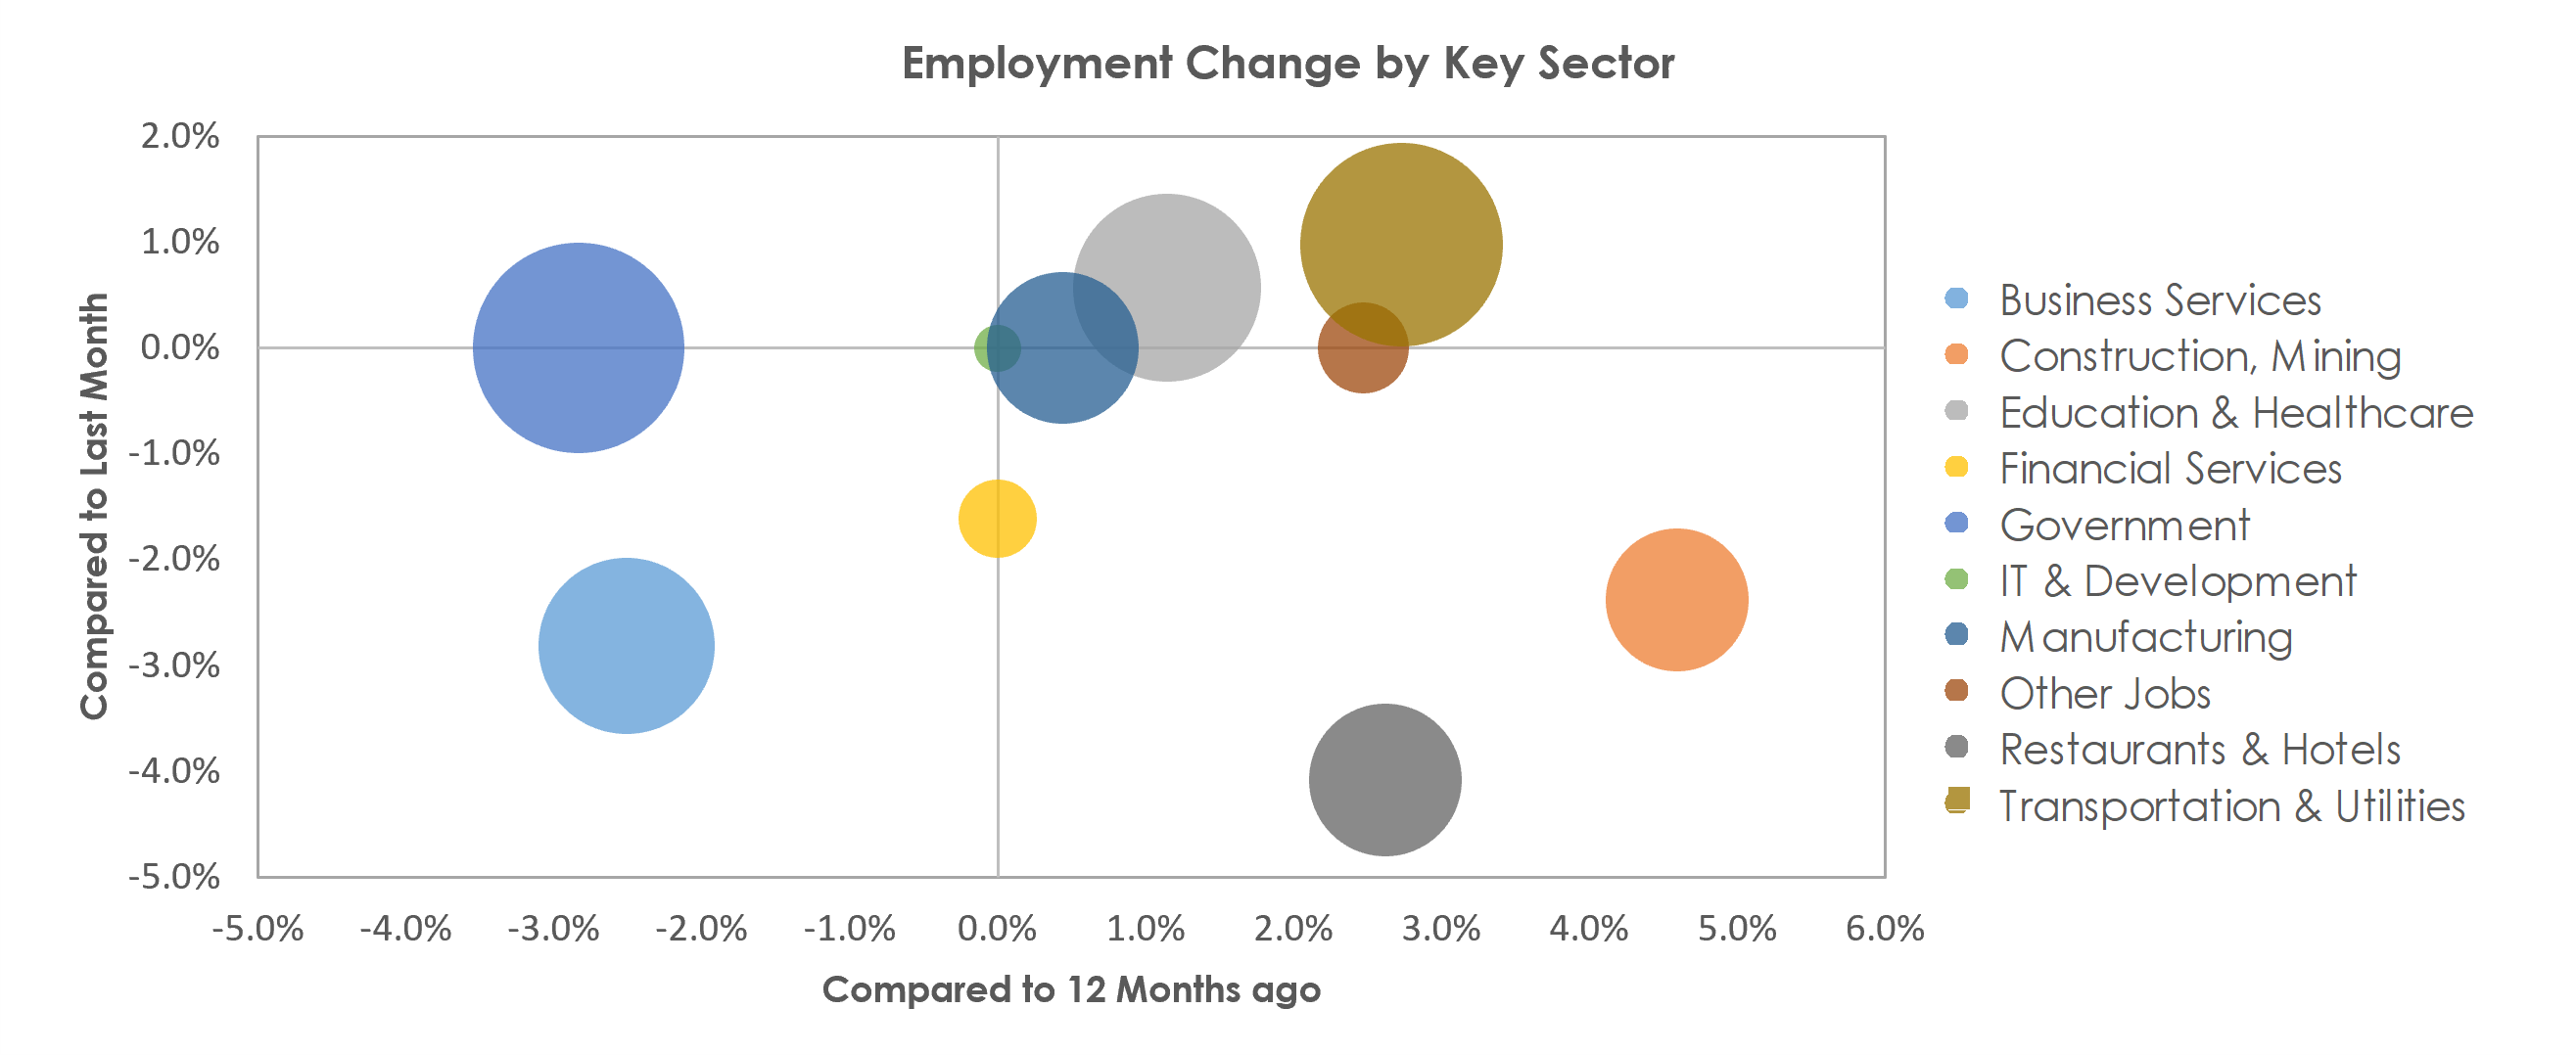 Augusta-Richmond County, GA-SC Unemployment by Industry September 2021